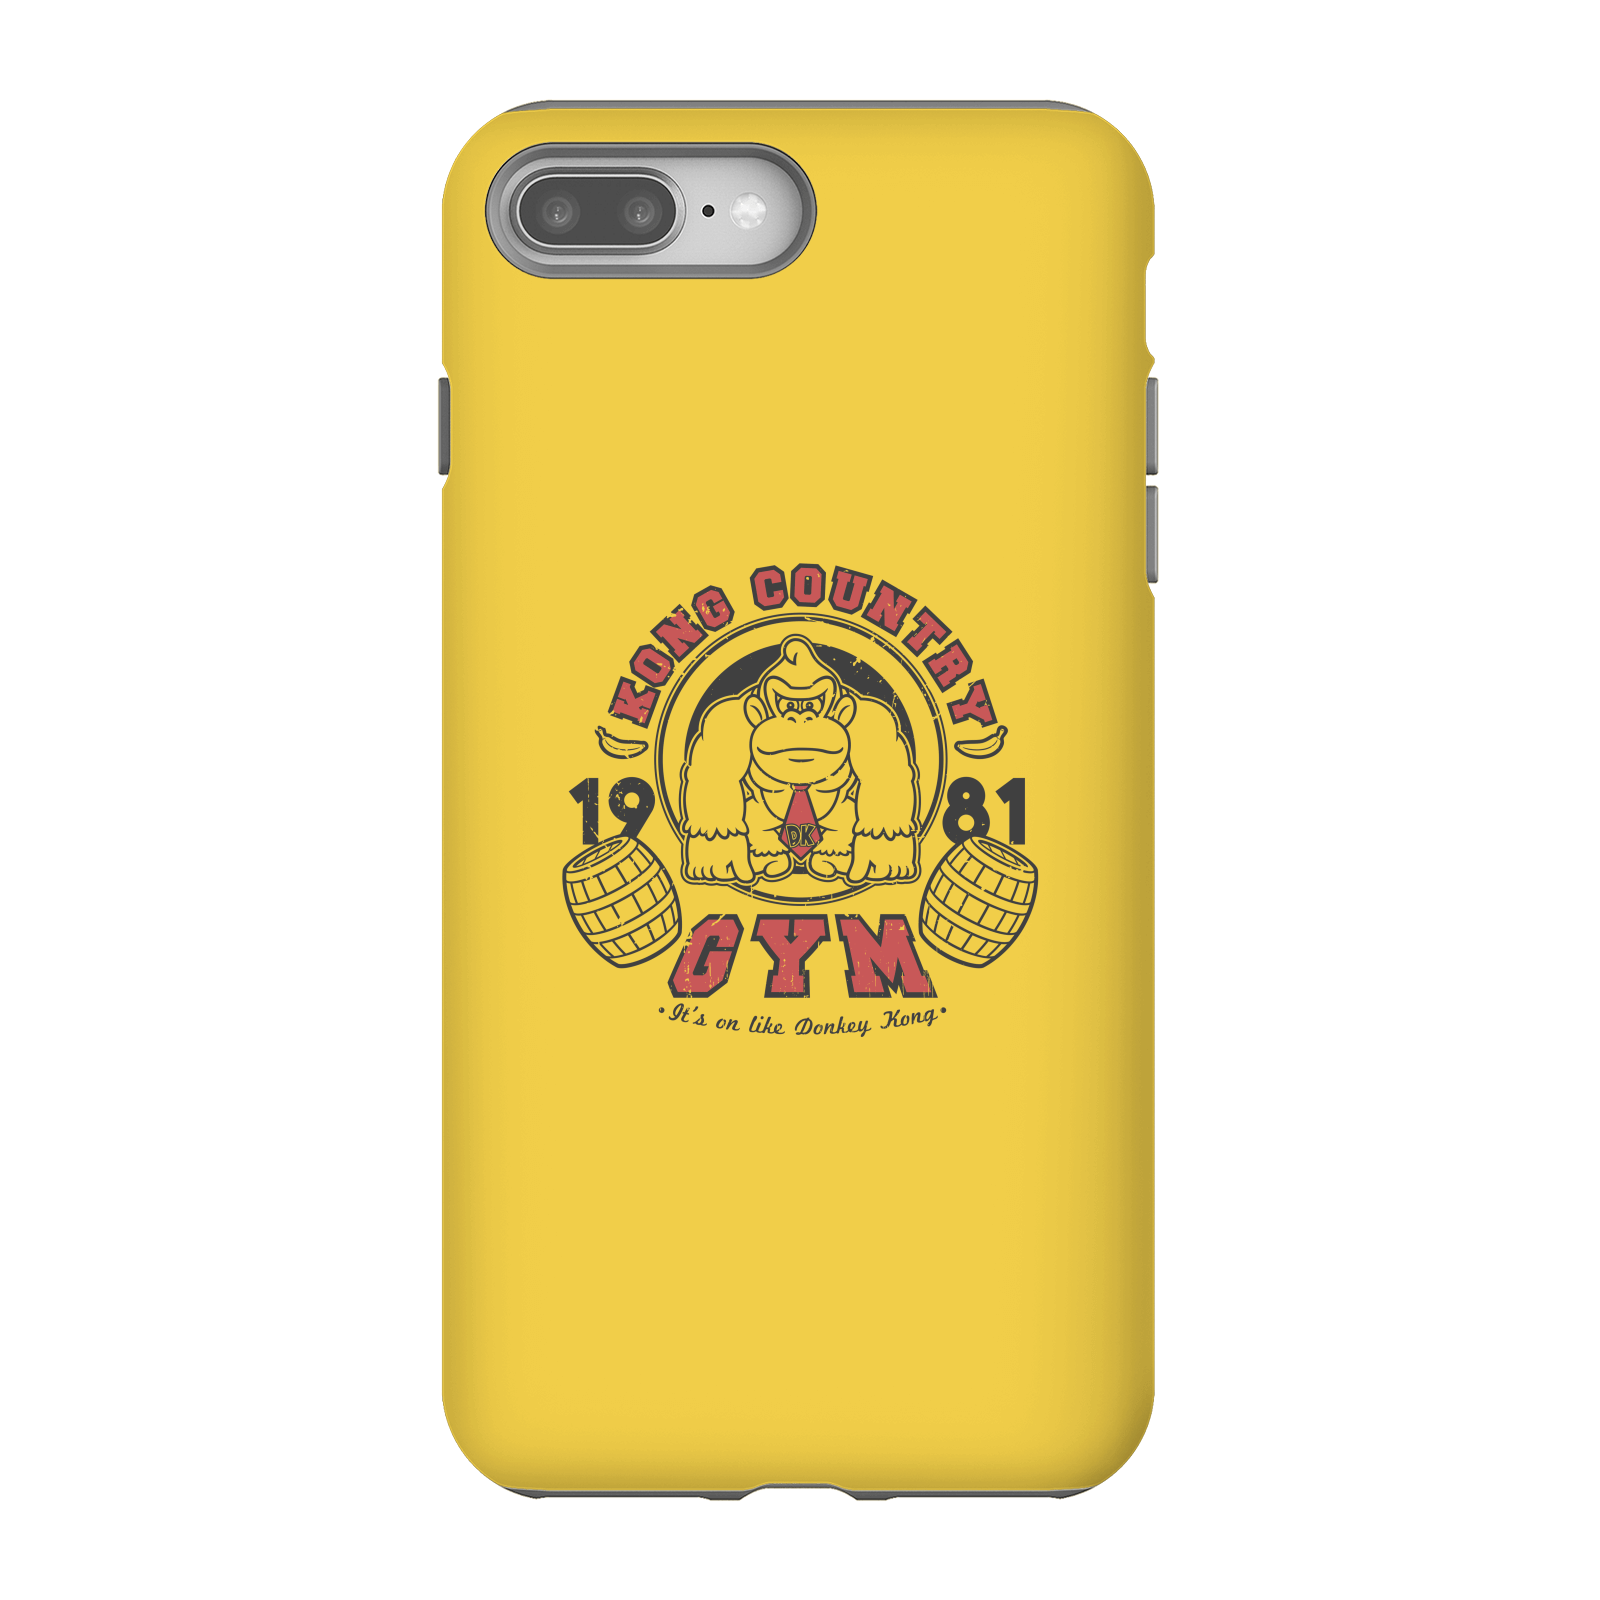 Nintendo Donkey Kong Gym Phone Case - iPhone 8 Plus - Tough Case - Gloss